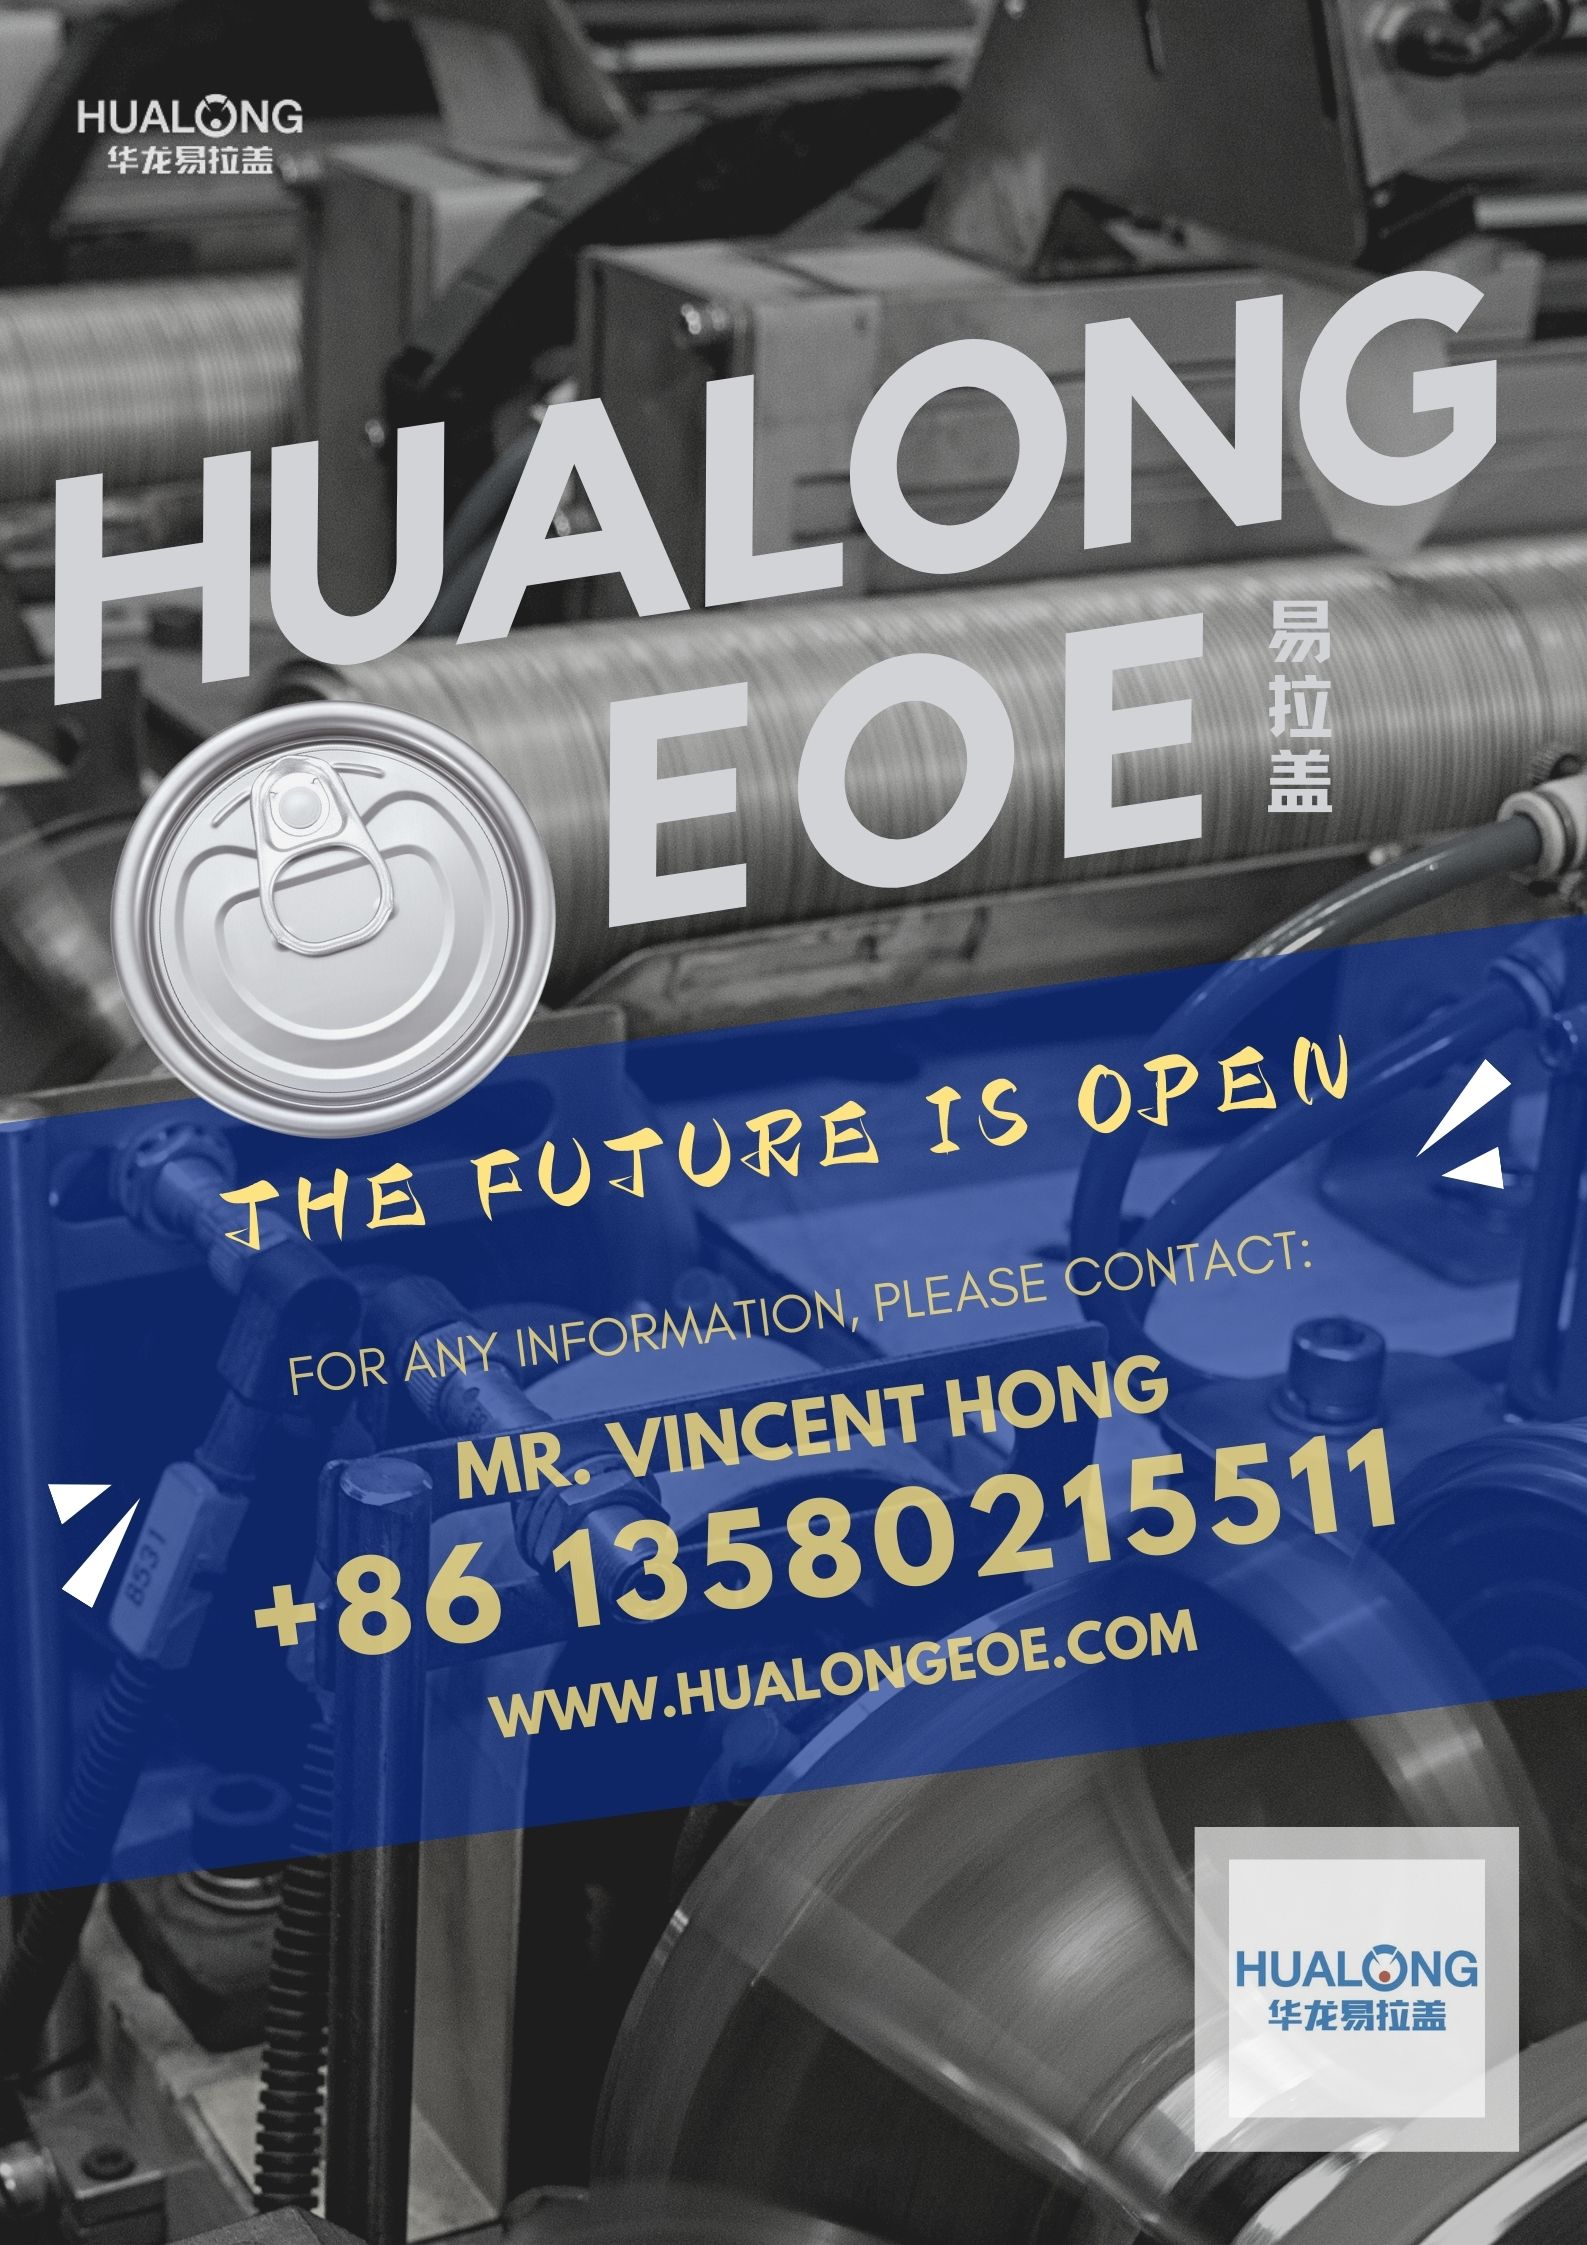 Hualong EOE: మేము సులభంగా ఓపెన్ ఎండ్ చేస్తాము